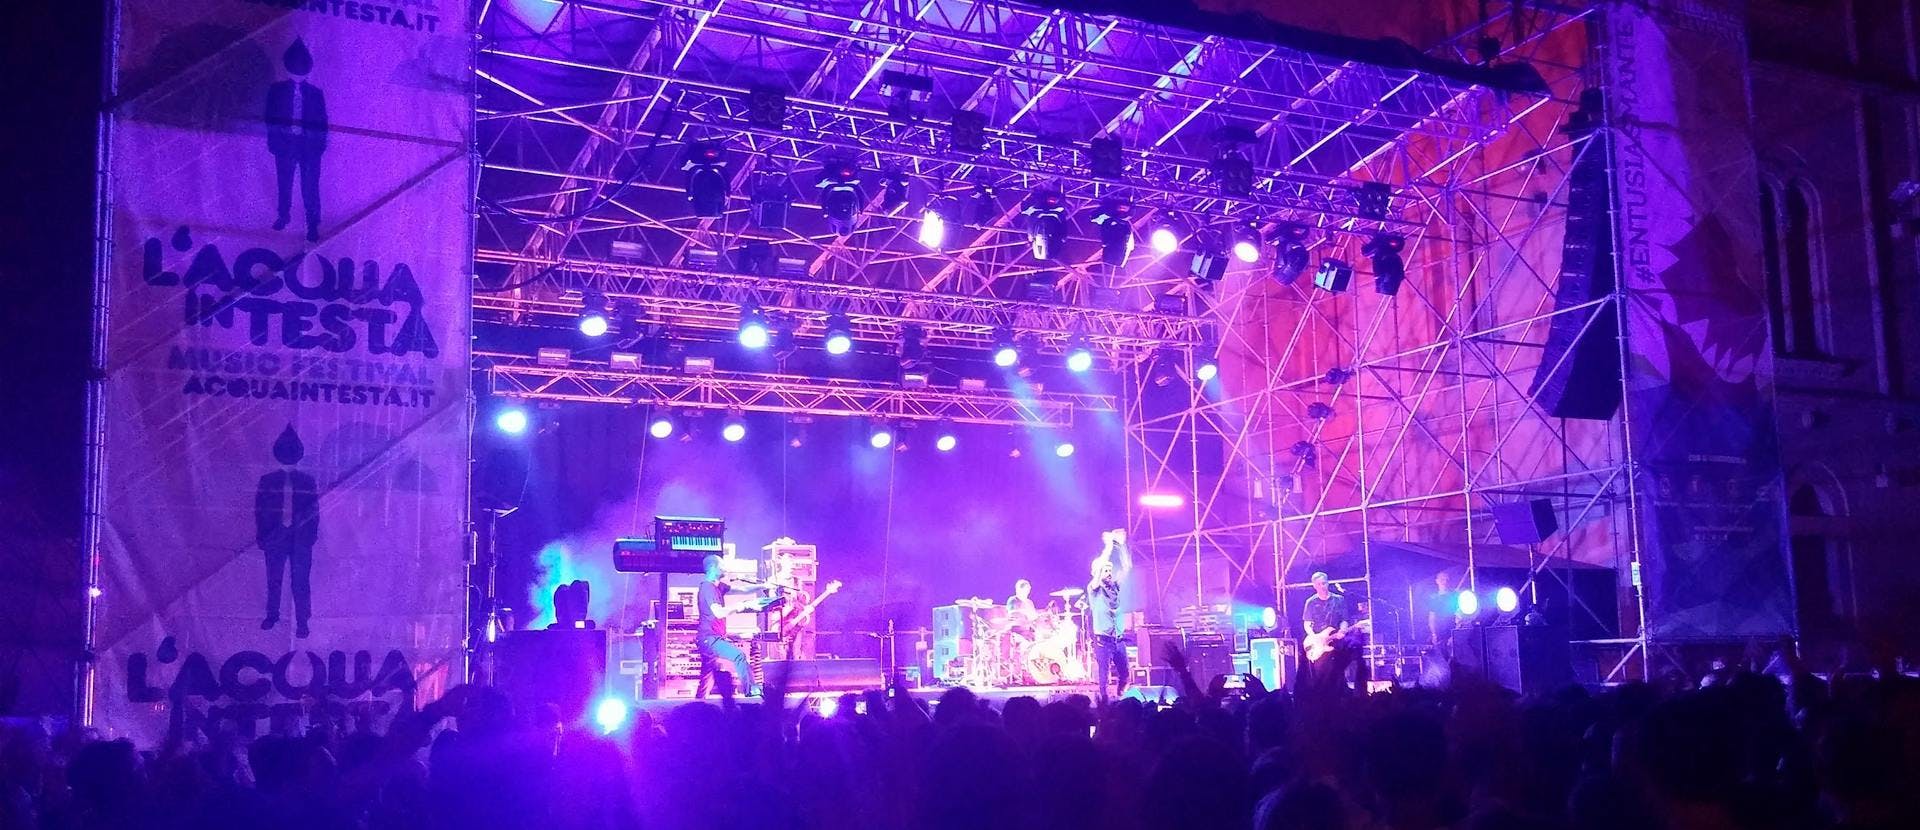 stage crowd human person lighting concert rock concert